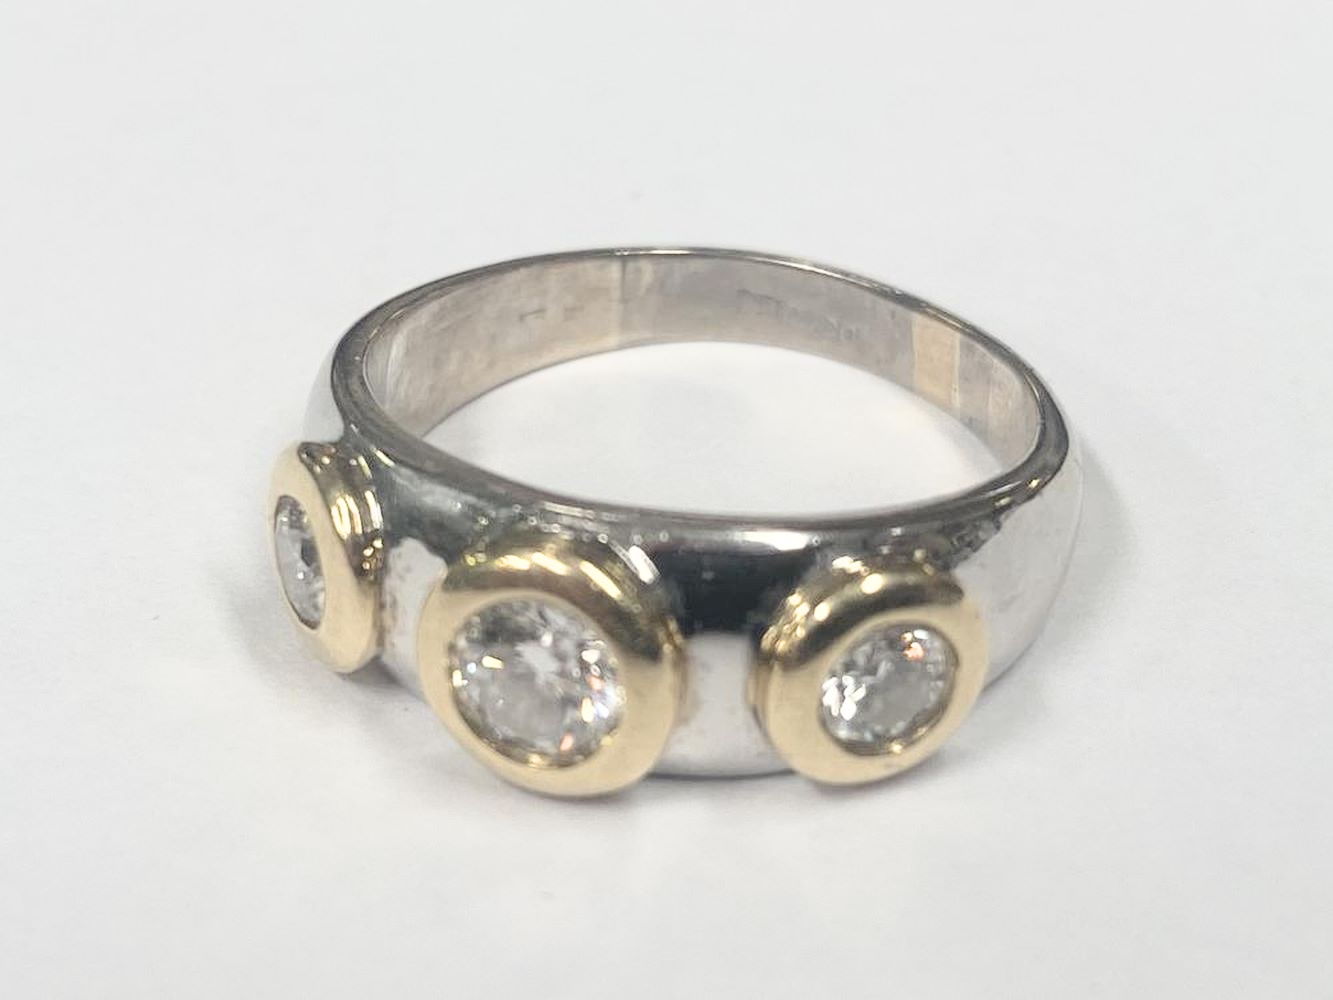 An 18ct yellow & white gold ring set round brilliant cut diamonds